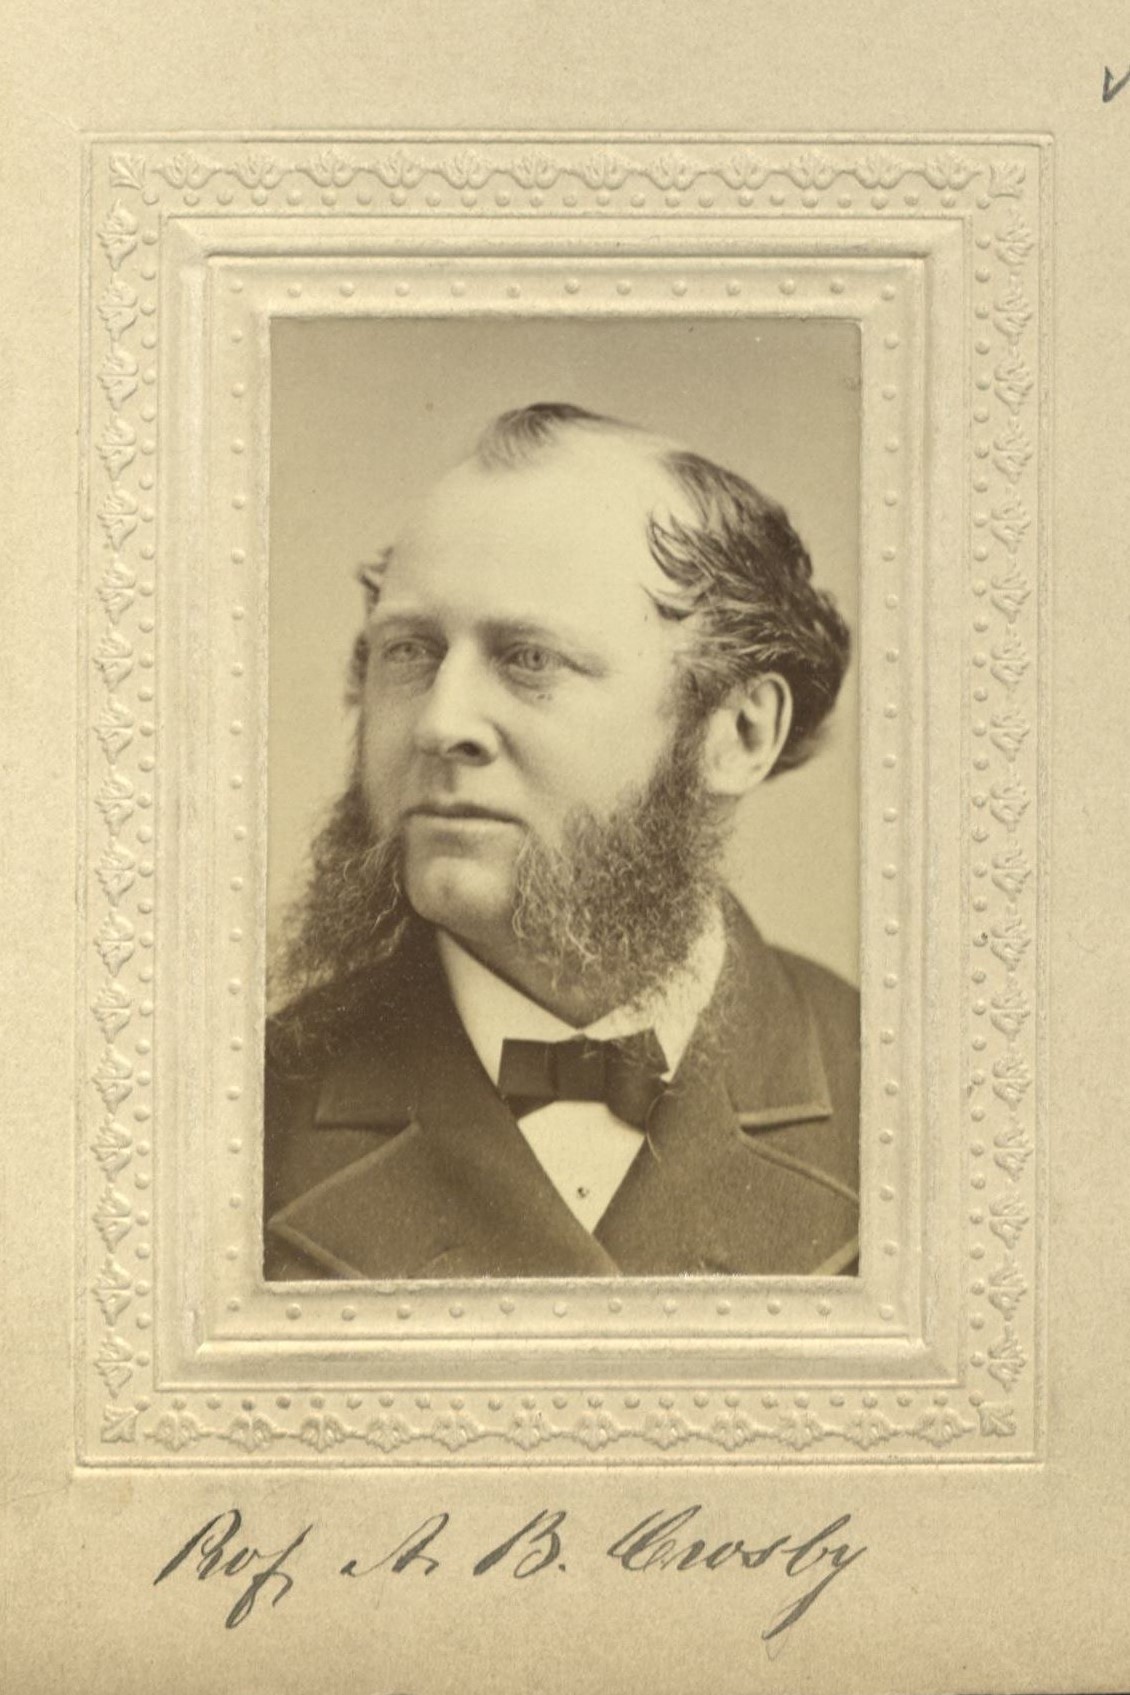 Member portrait of A. B. Crosby